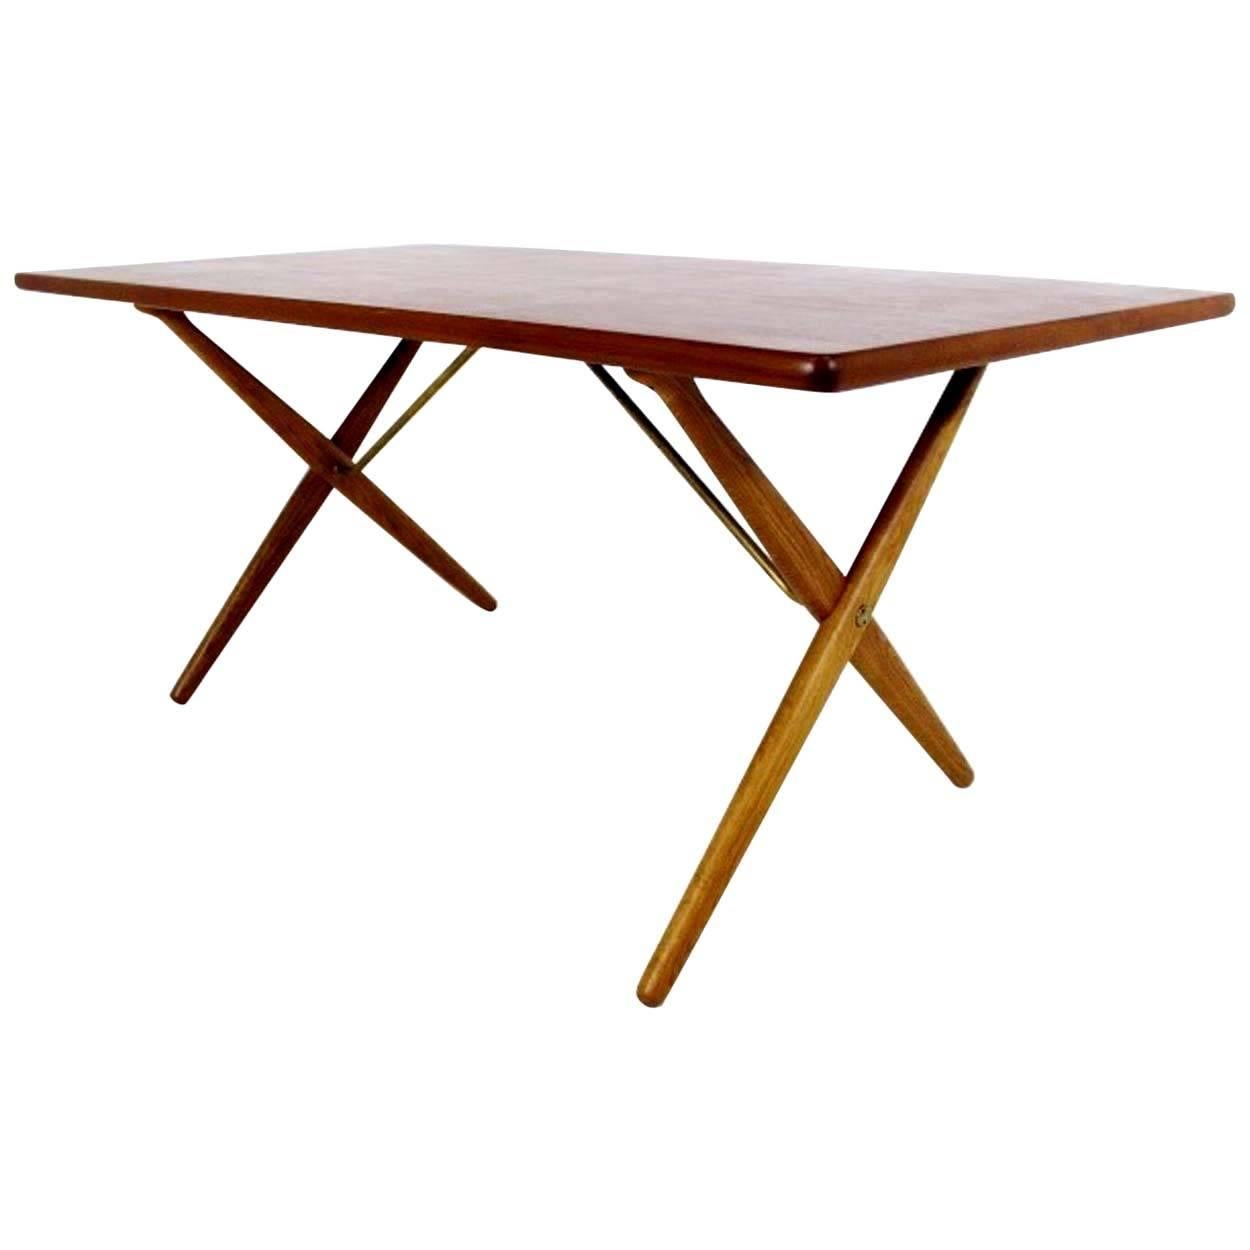 Dining Table / Writing Desk with Cross-Leg, At-303 Hans Wegner for Andreas Tuck